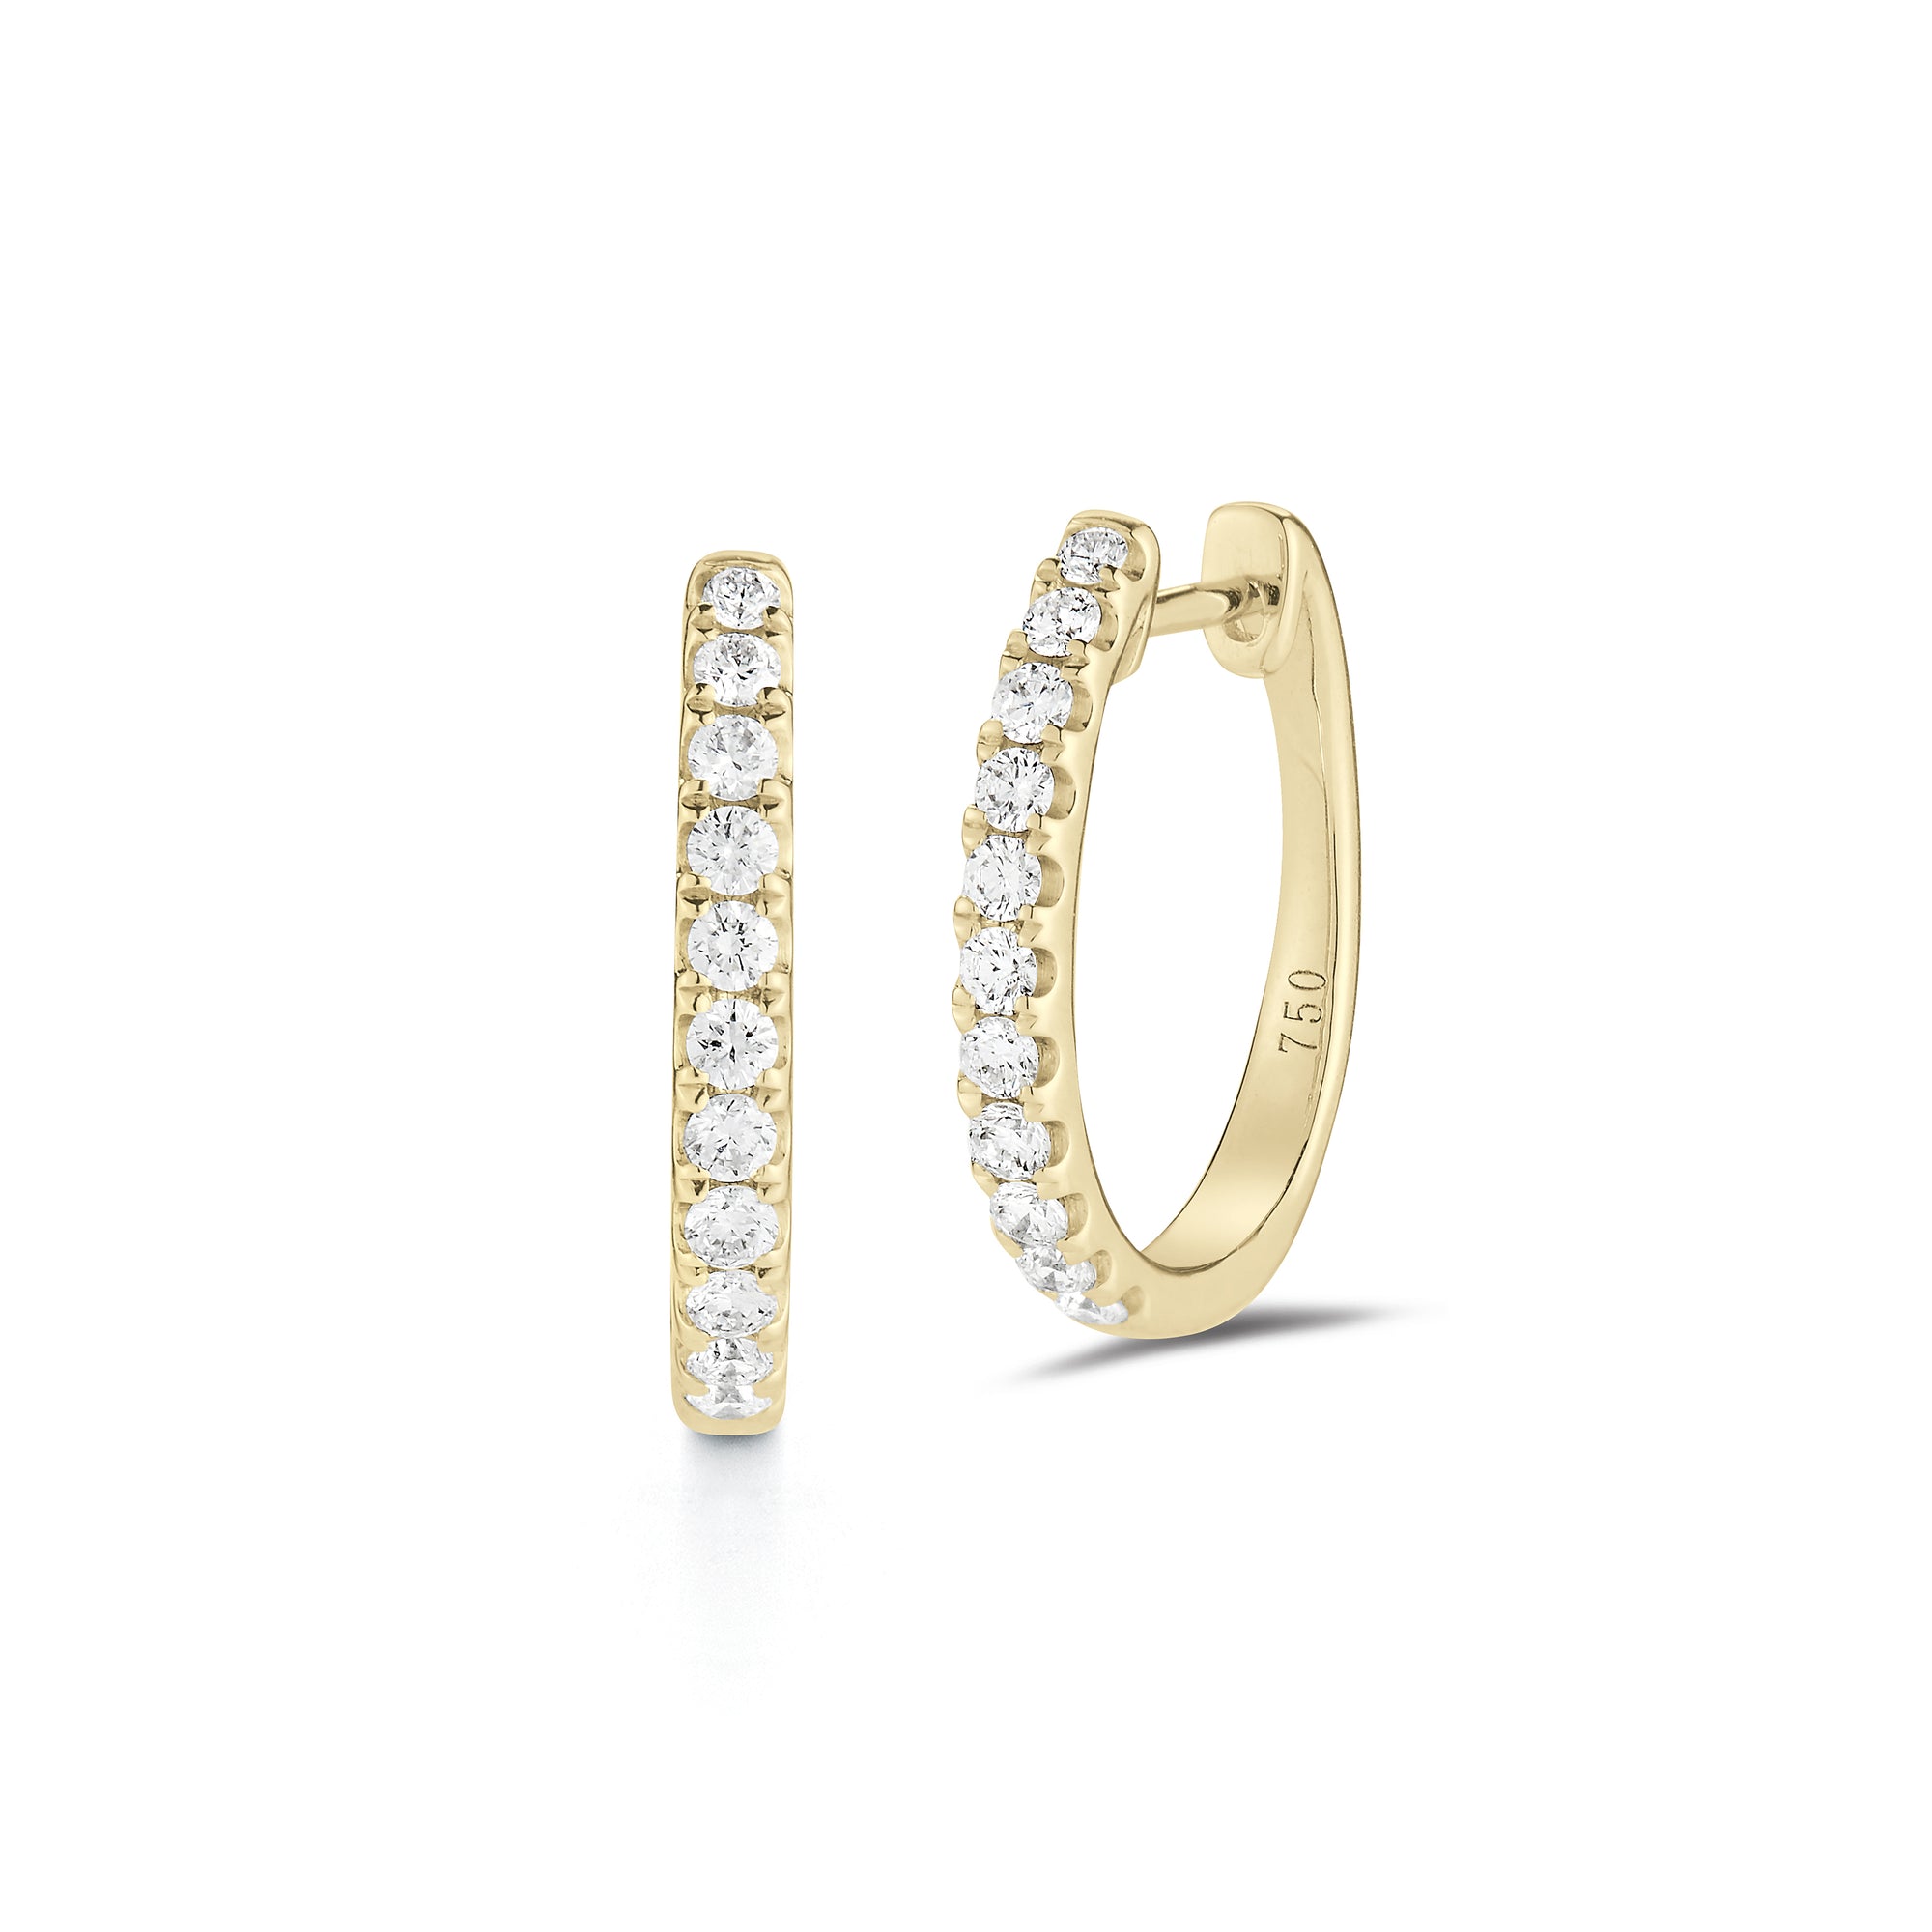 Diamond huggie earrings 18k gold, 3.49 grams, 22 round shared prong-set diamonds .44 carats.  Earring size 16.5 millimeters, width 2 millimeters.